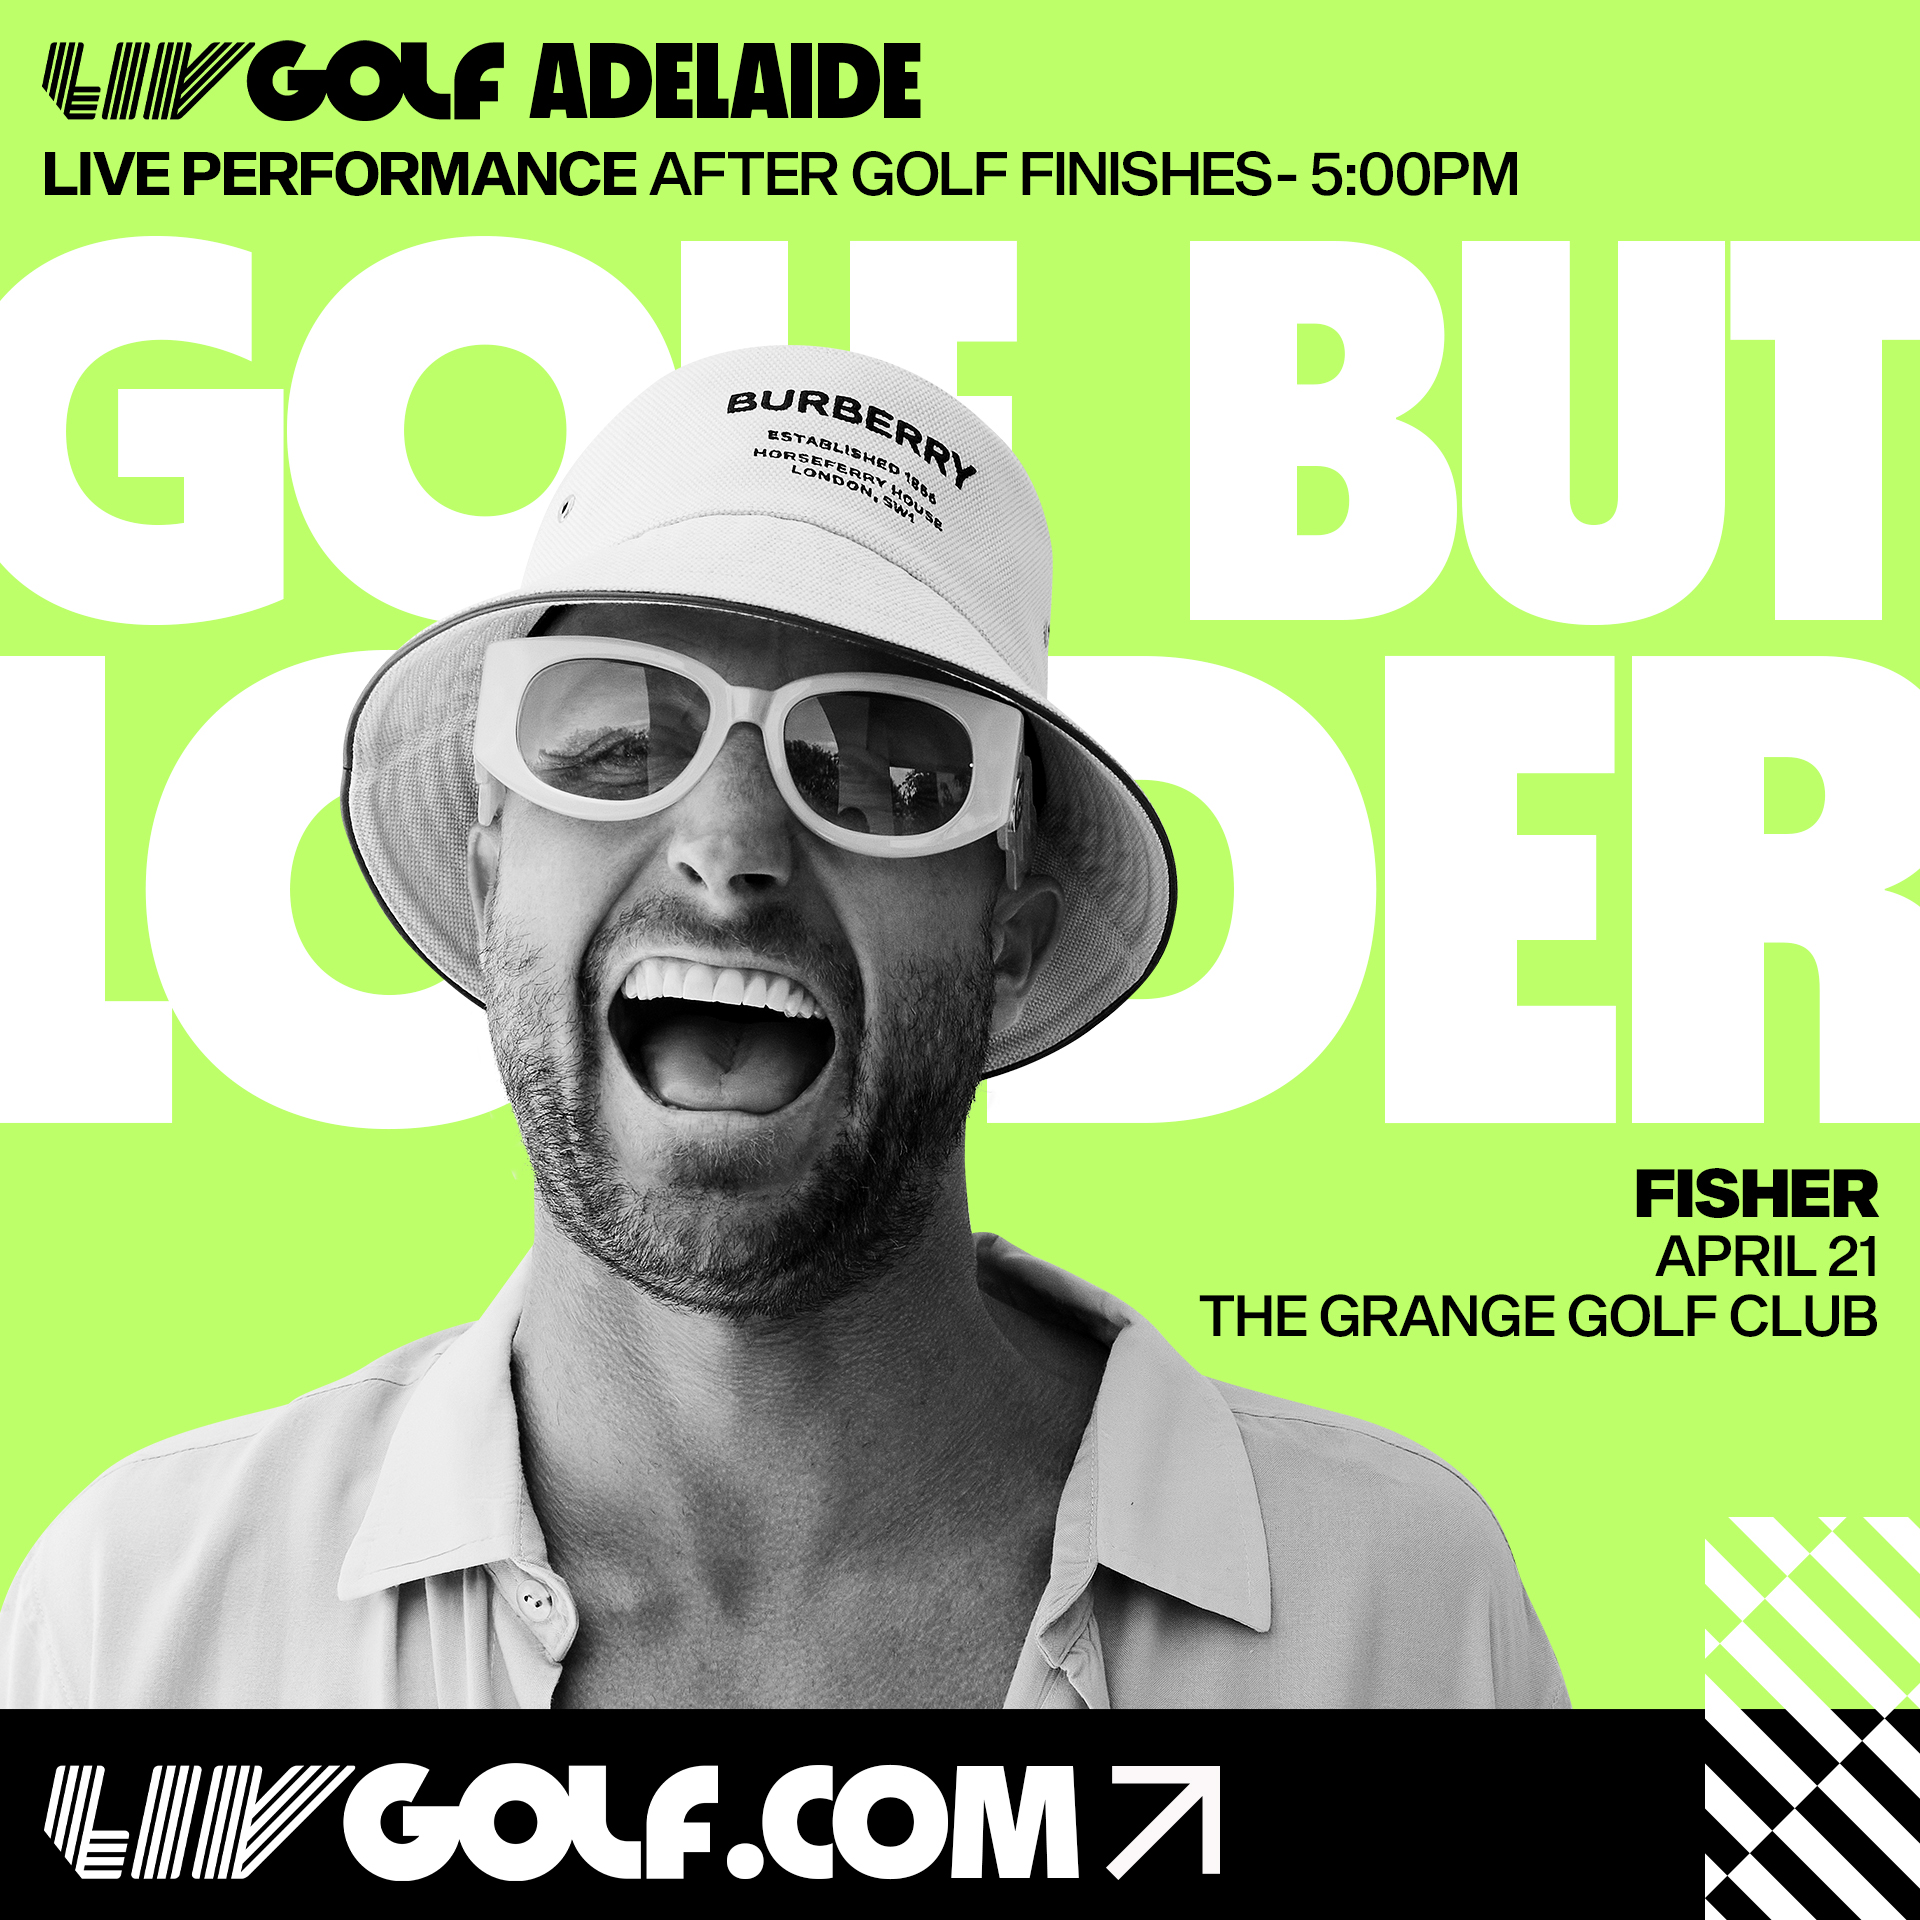 FISHER LIV Golf Adelaide